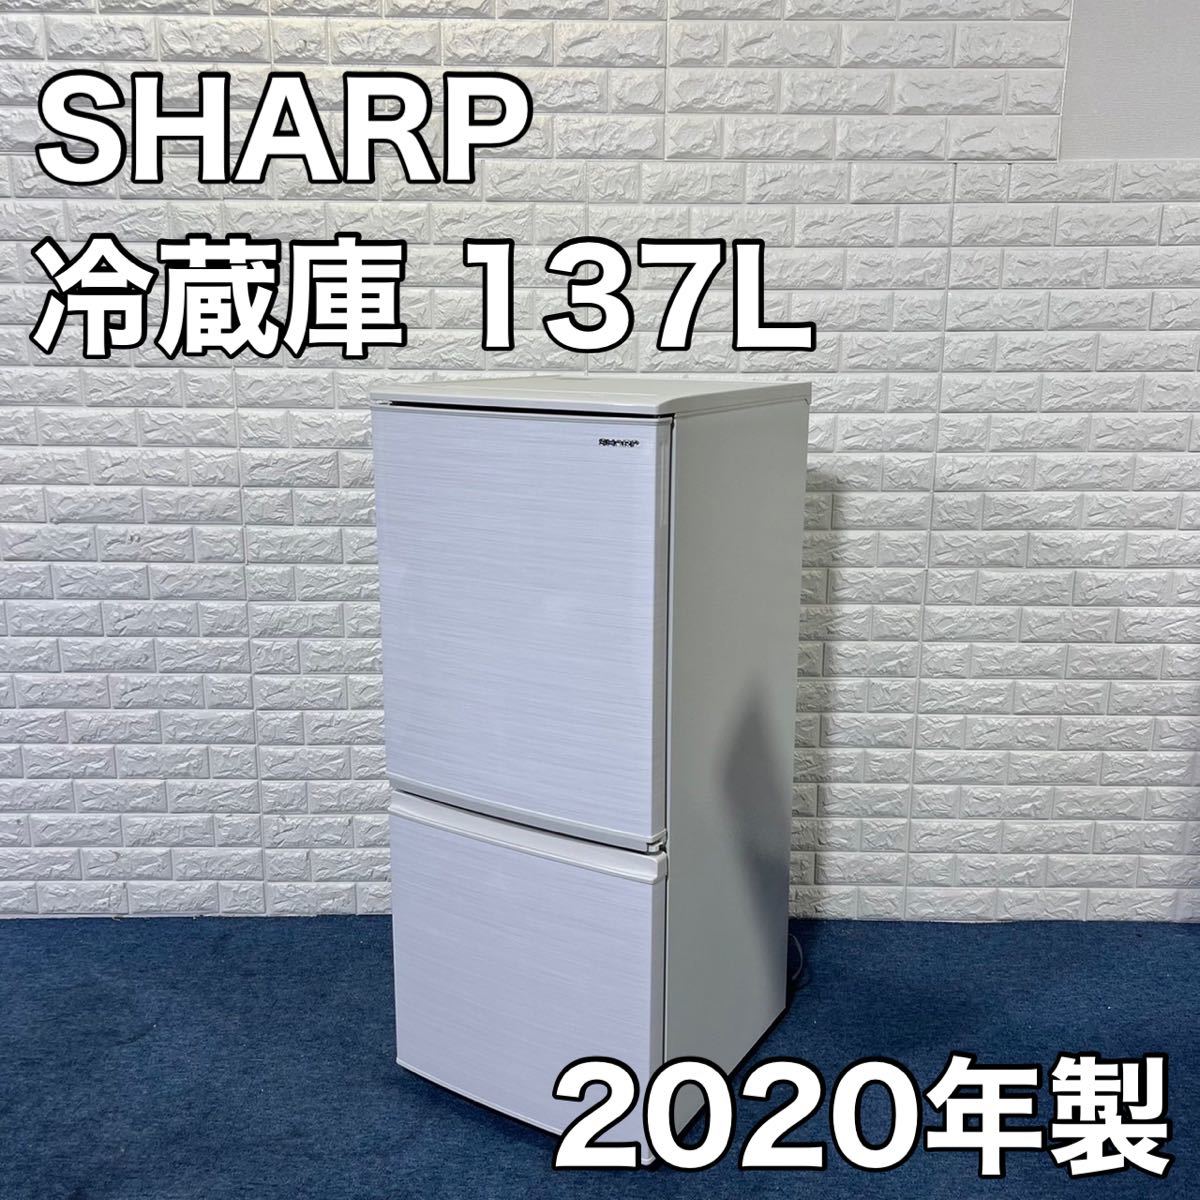 SHARP シャープ 冷蔵庫 SJ-D14F-W 137L 2020年製 家電 kanfa720.com